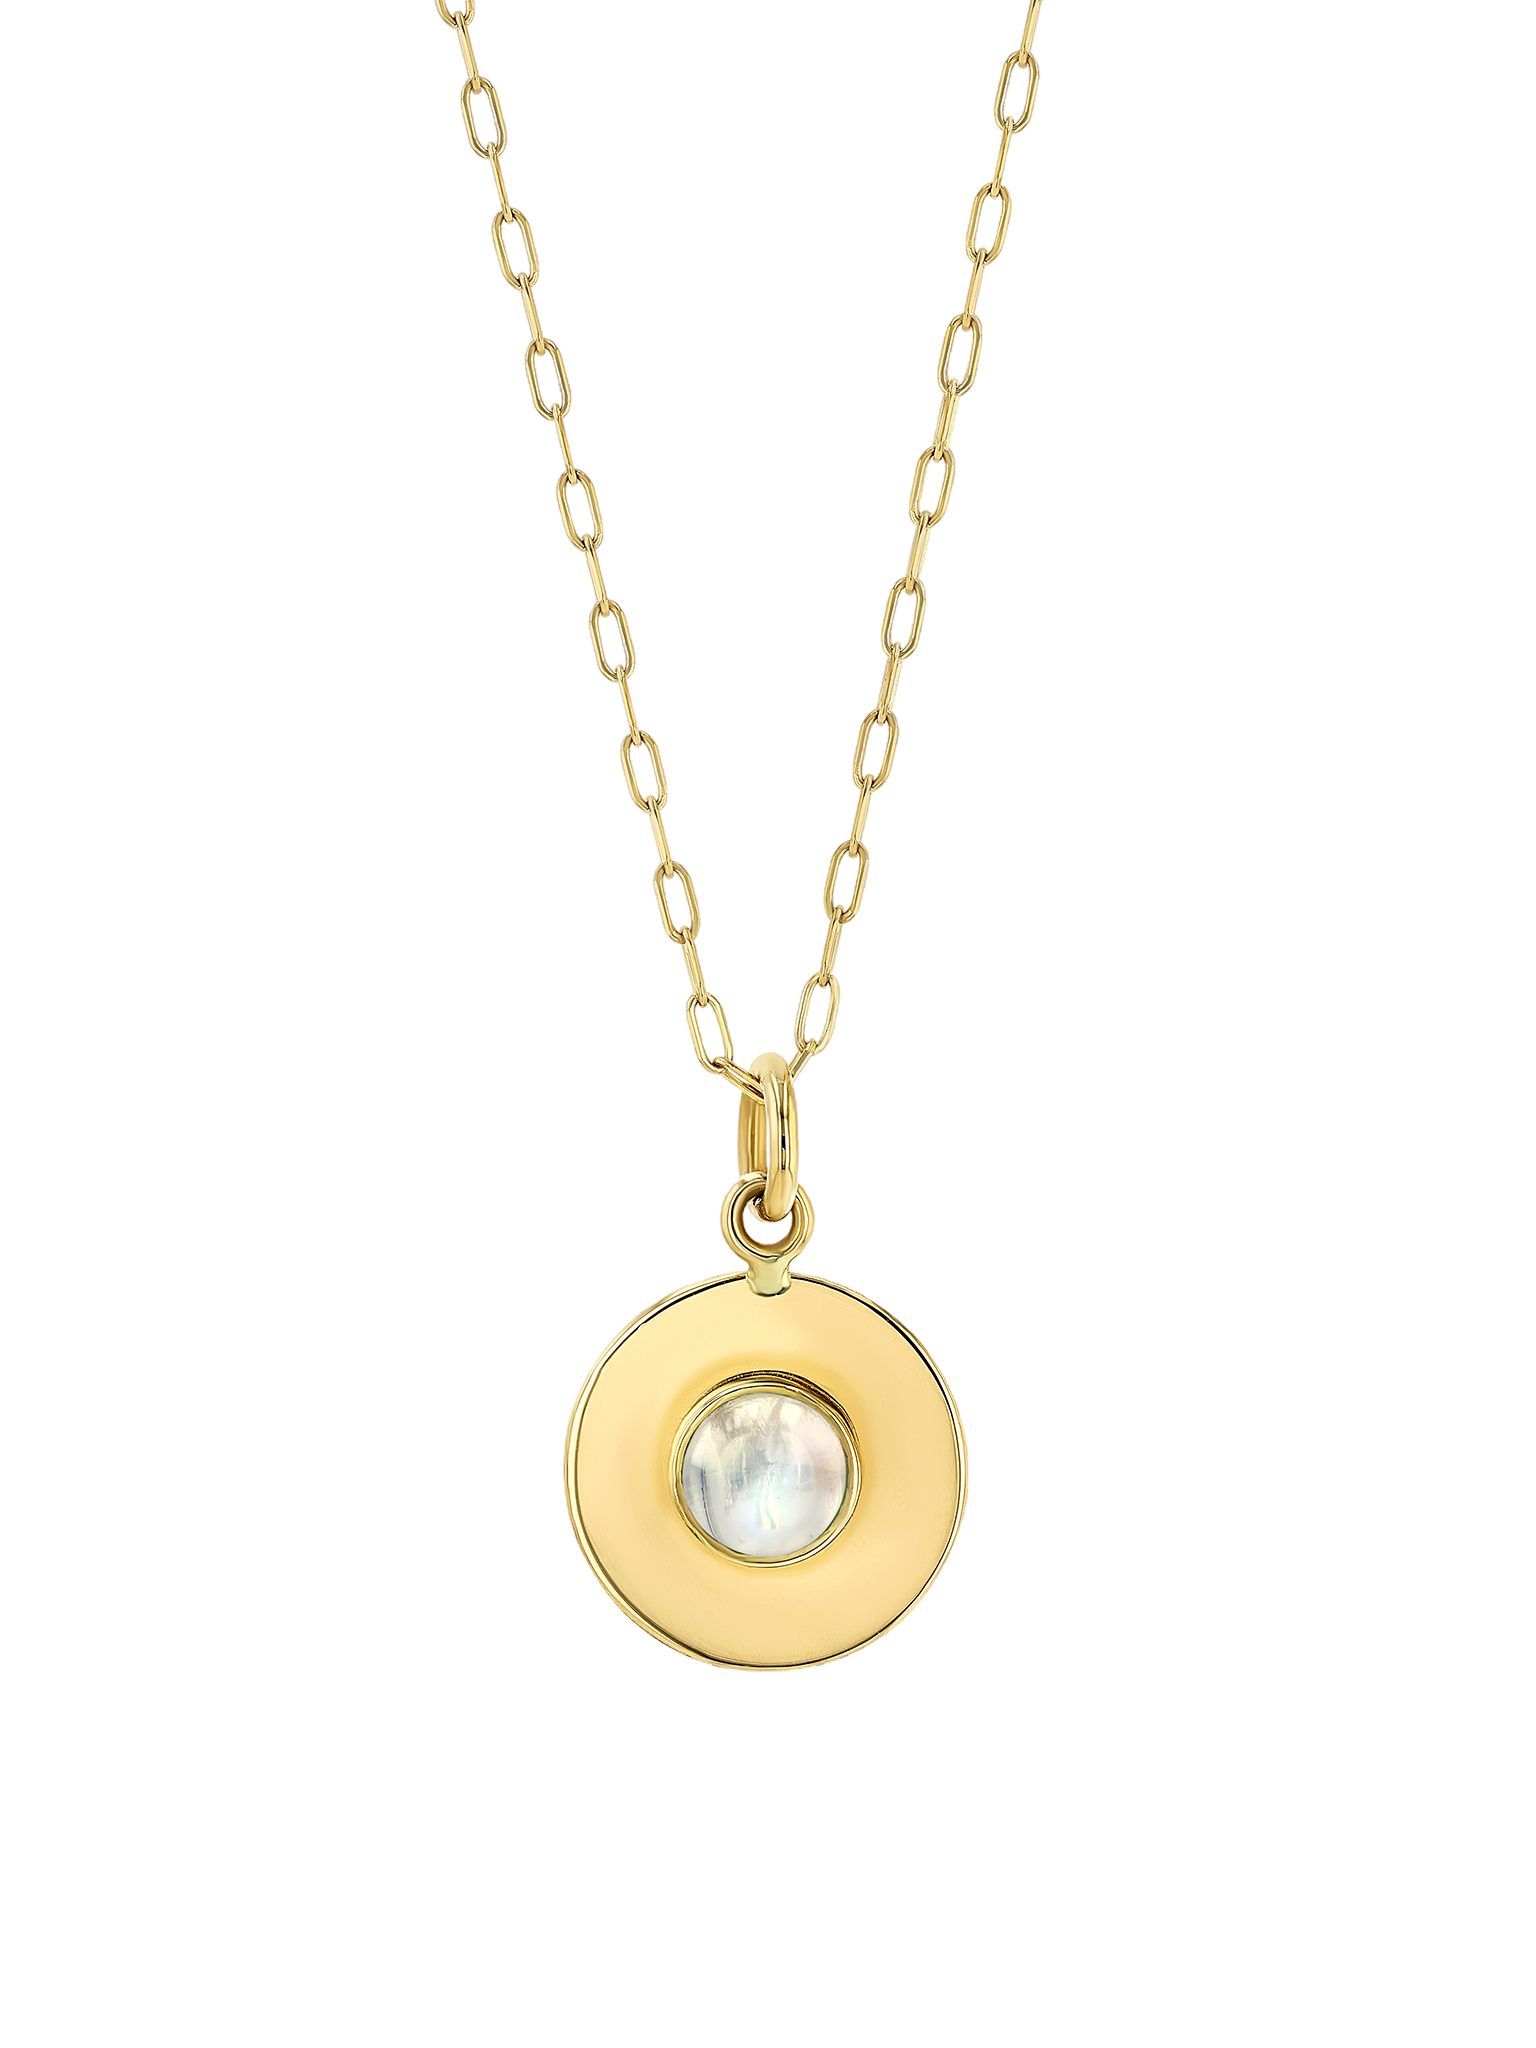 Light disc necklace moonstone